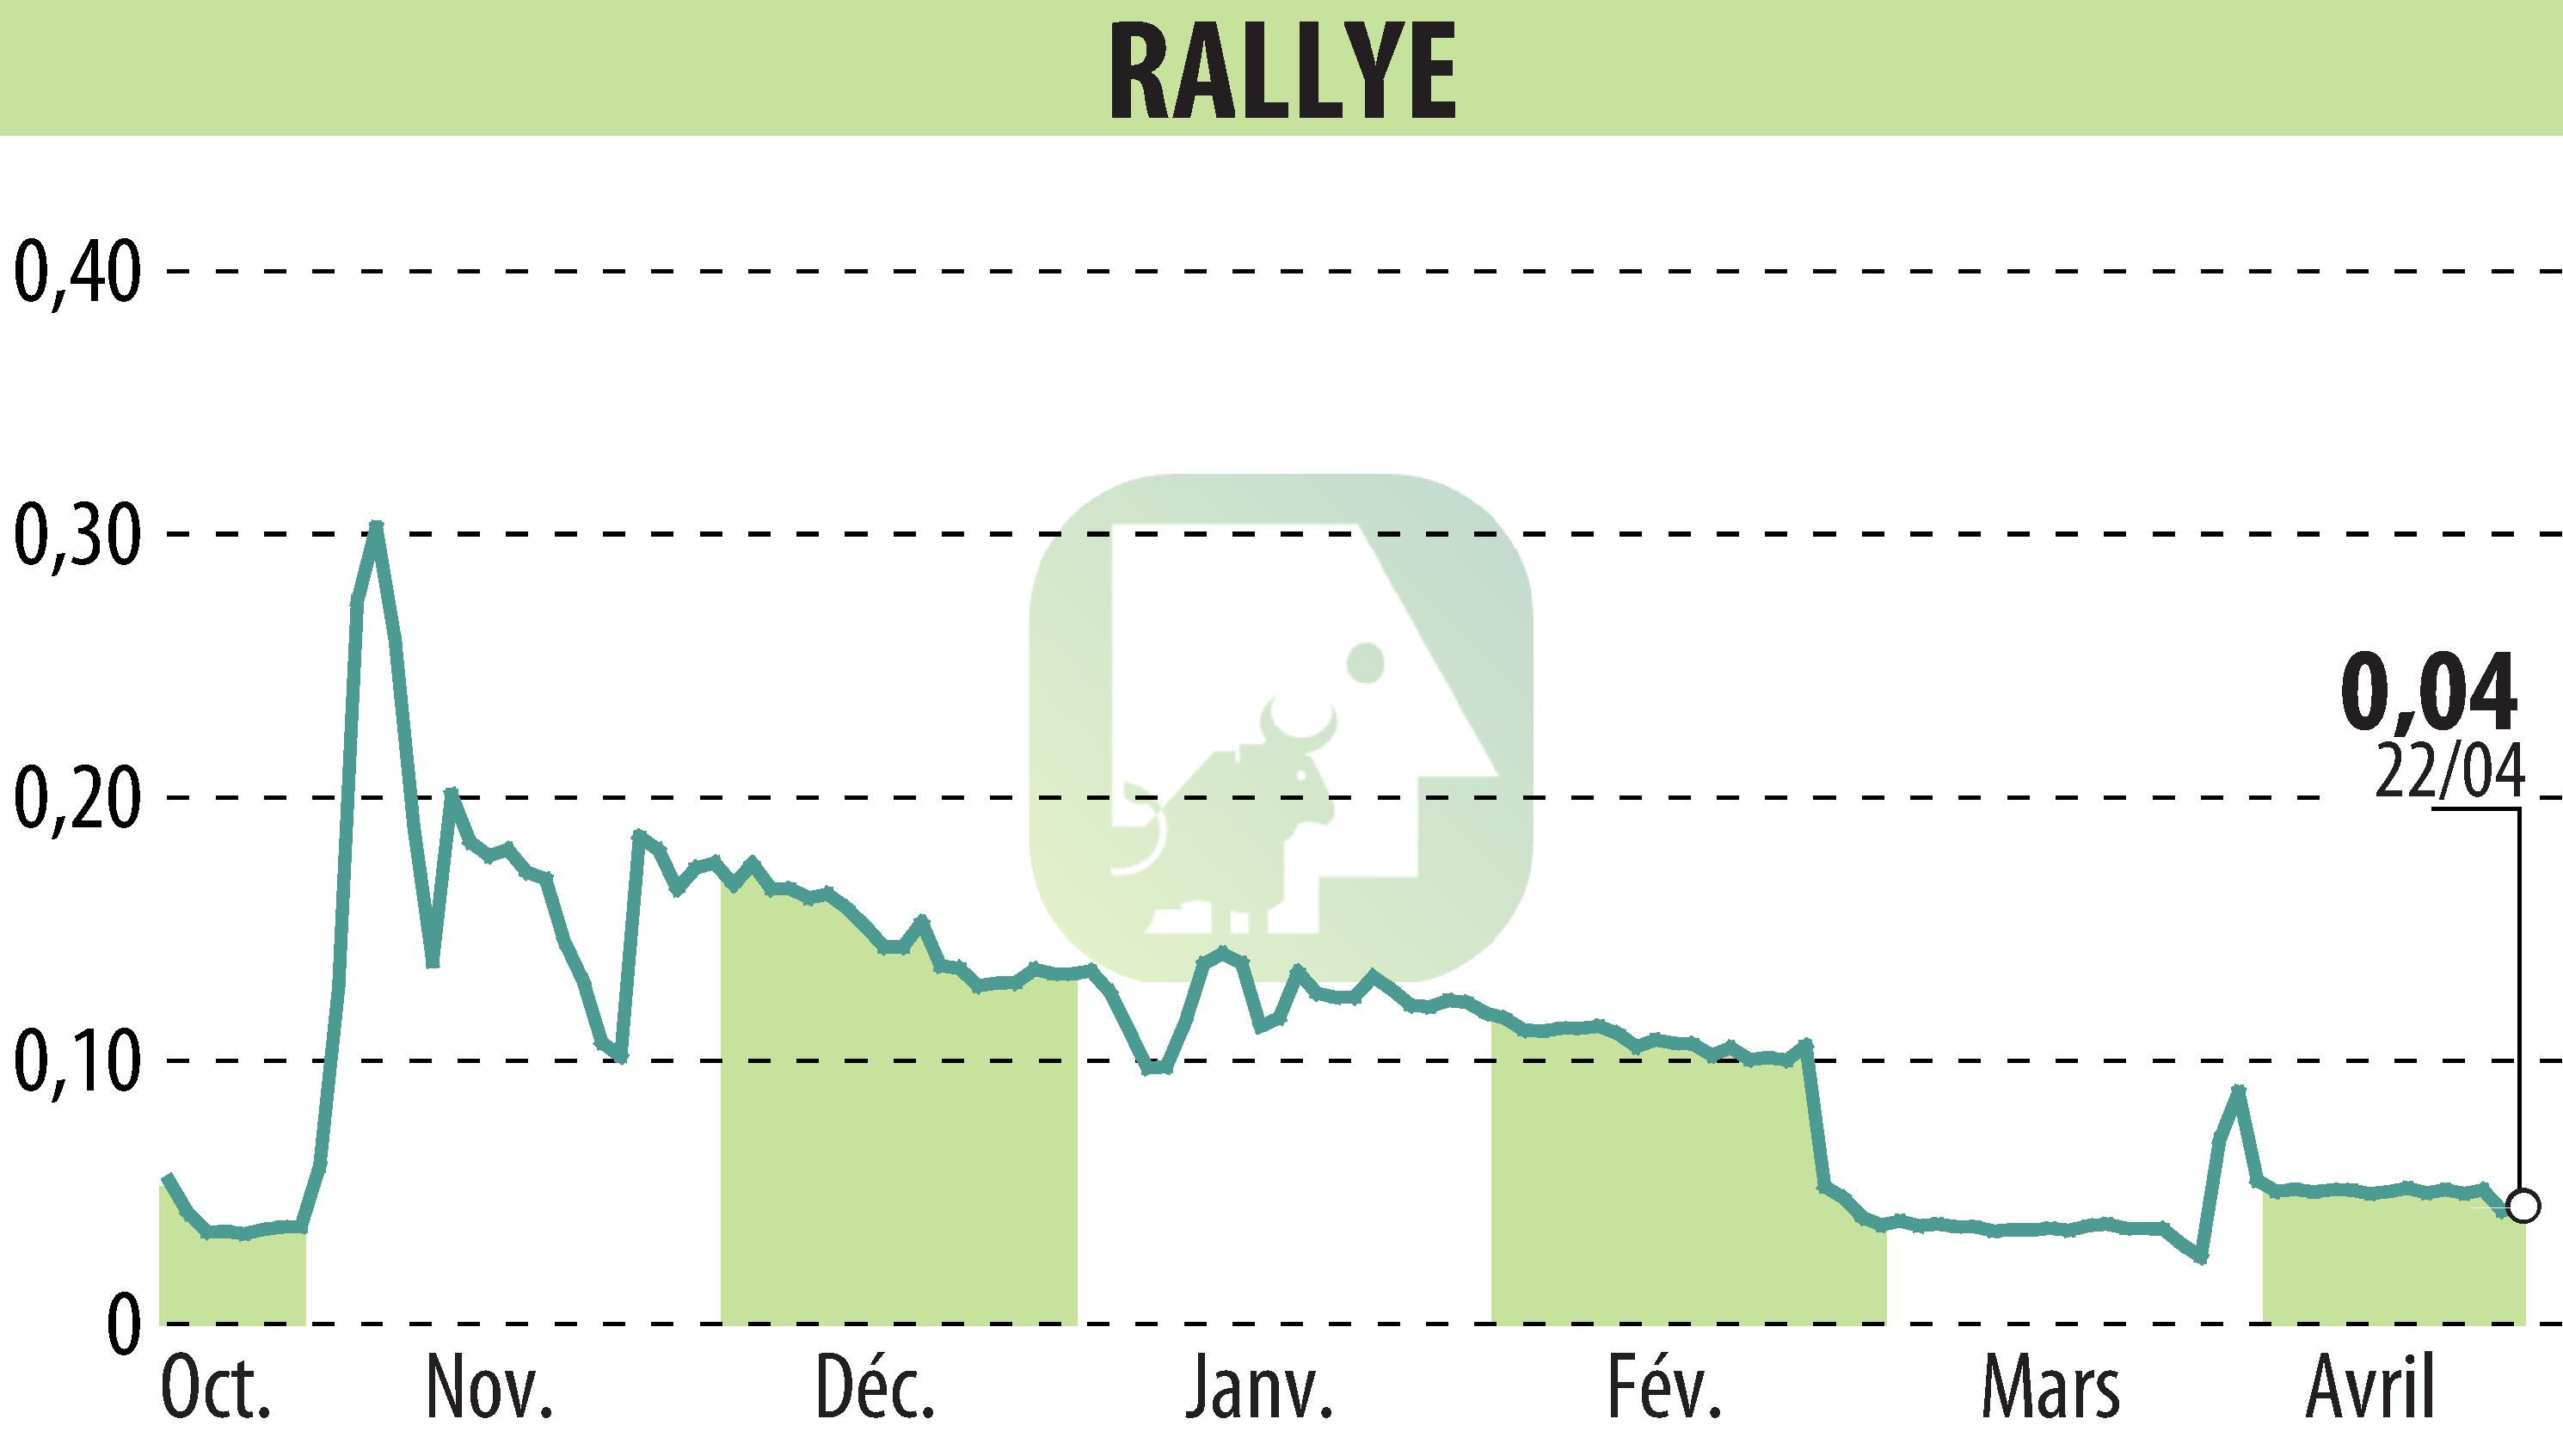 Stock price chart of RALLYE (EPA:RAL) showing fluctuations.